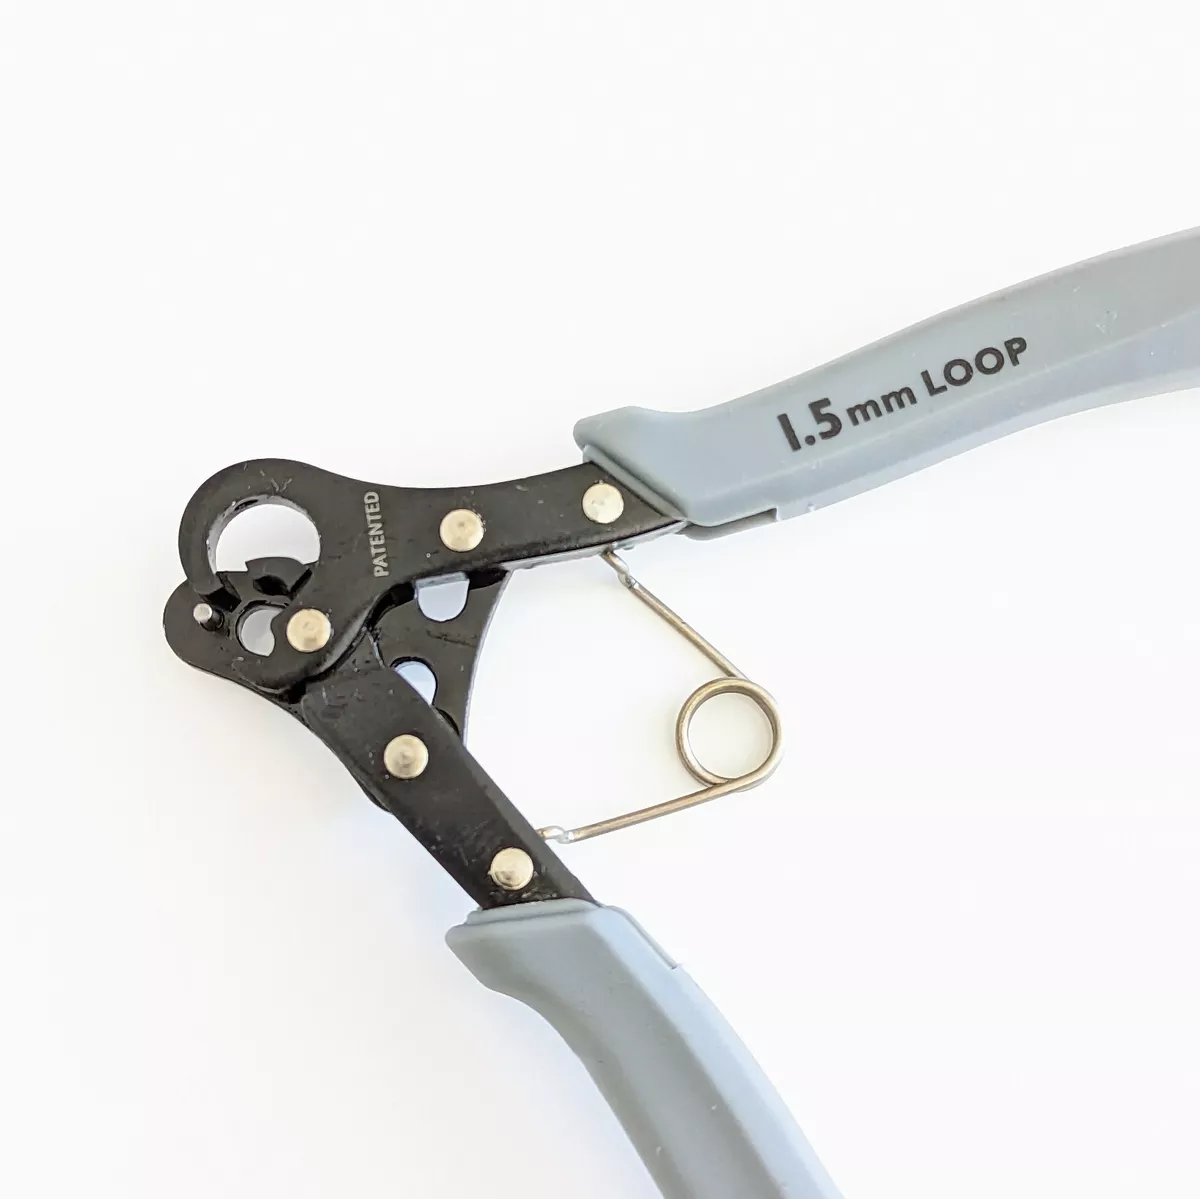 The 1-Step Looper - 1.5 mm Loops for 24-18 Gauge Wires